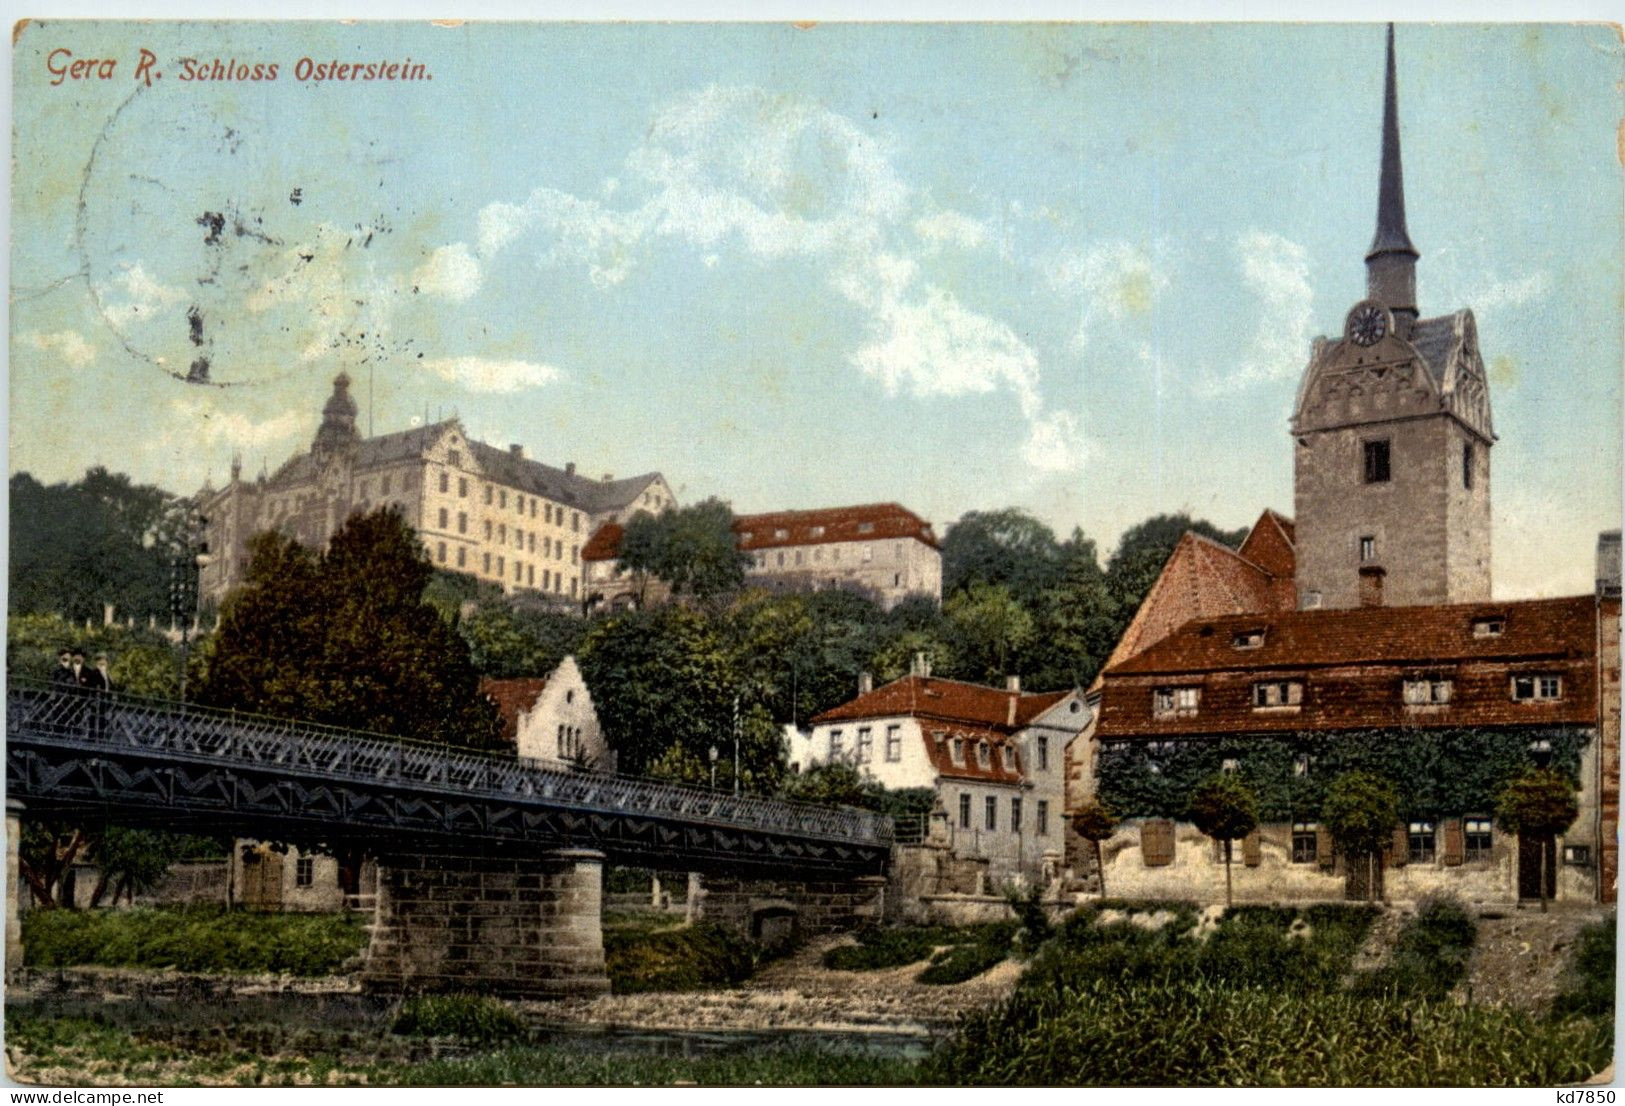 Gera - Schloss Osterstein - Gera